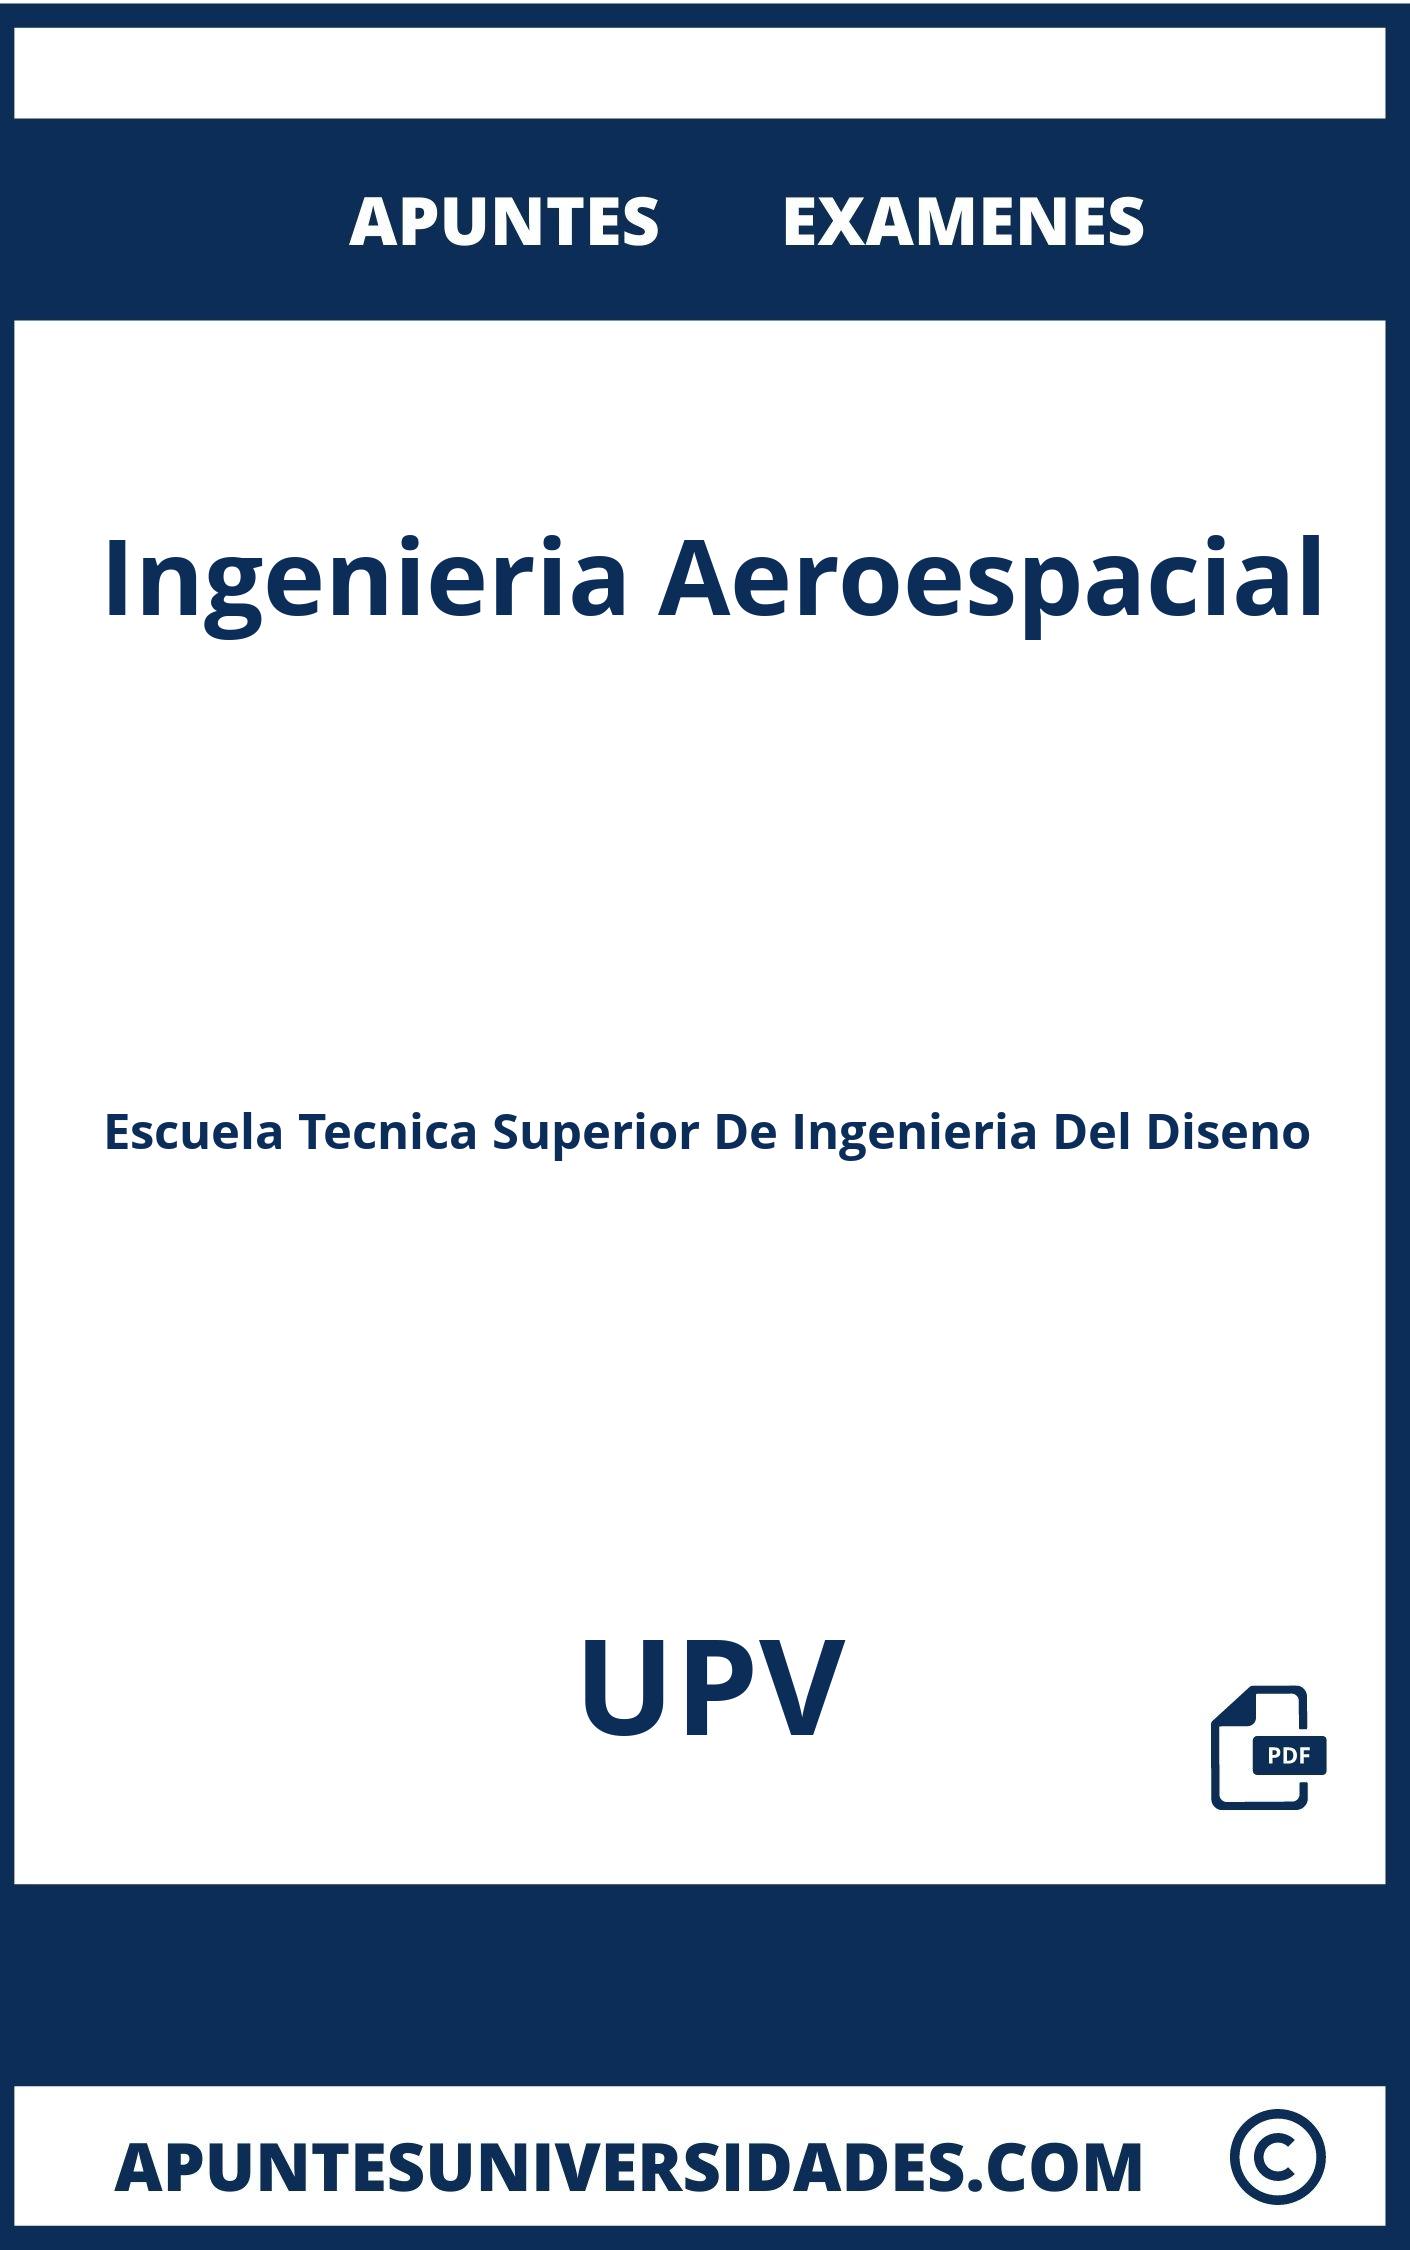 Apuntes Examenes Ingenieria Aeroespacial UPV